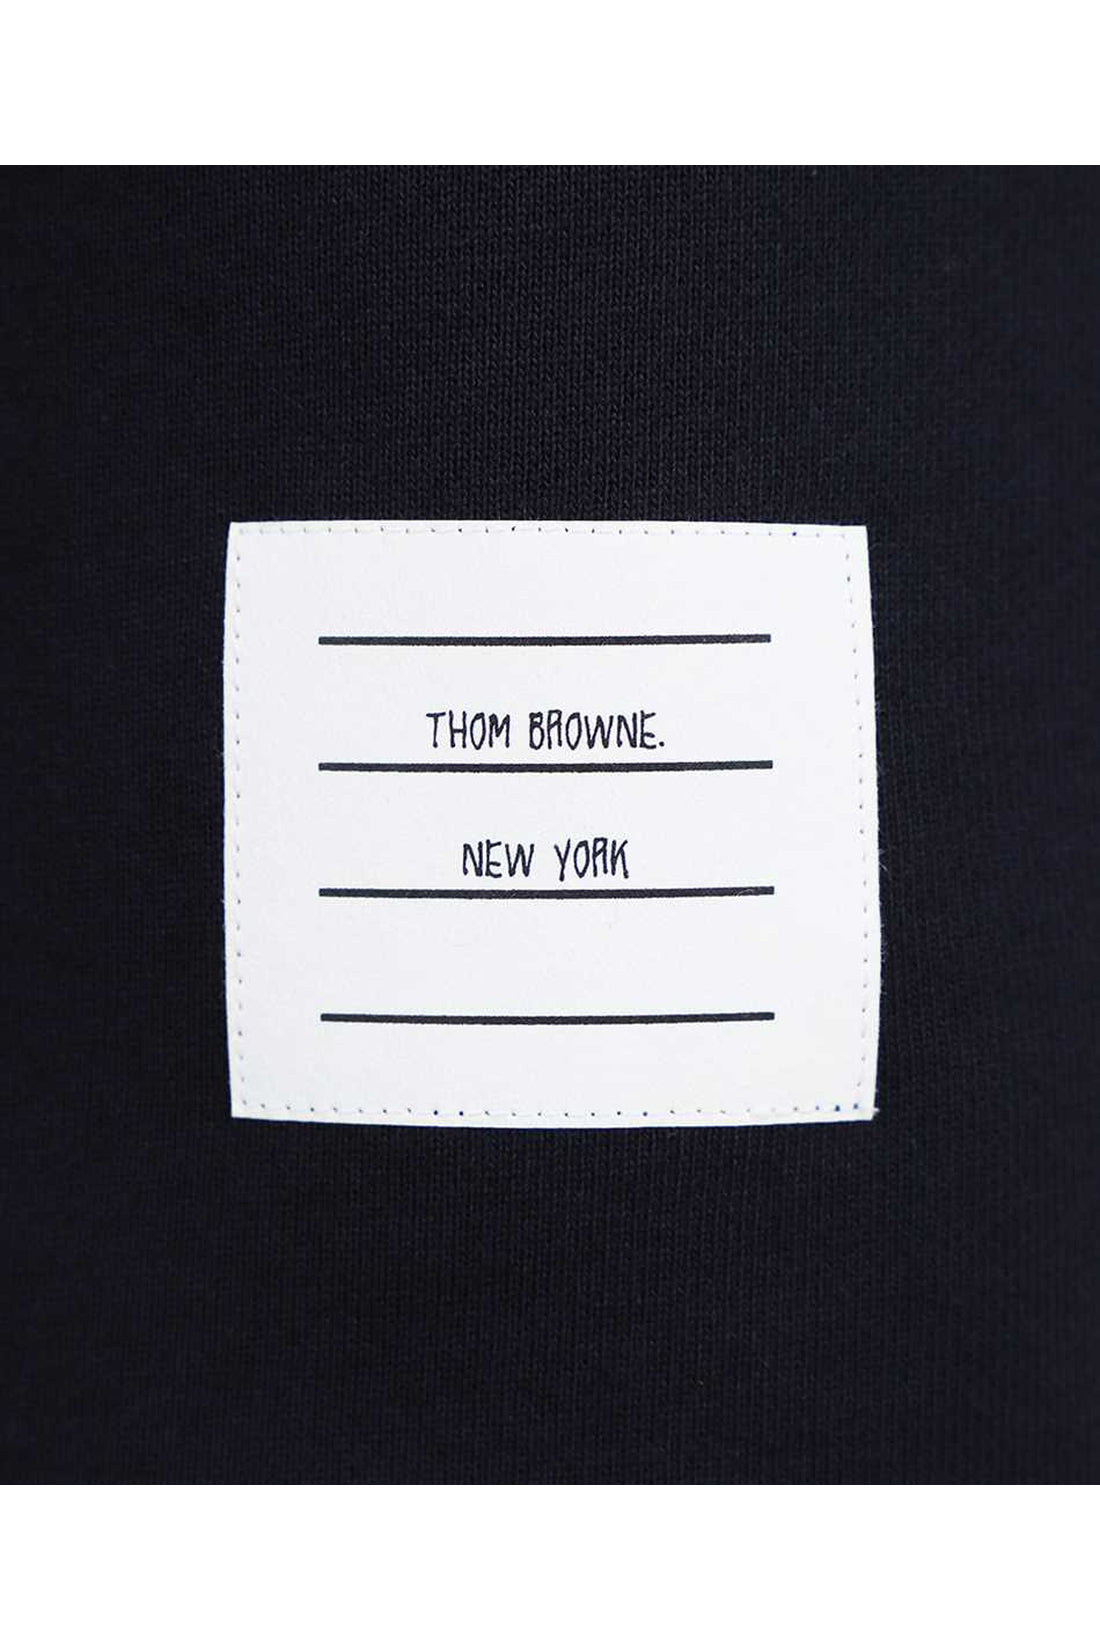 Thom Browne-OUTLET-SALE-Cotton sweatdress-ARCHIVIST